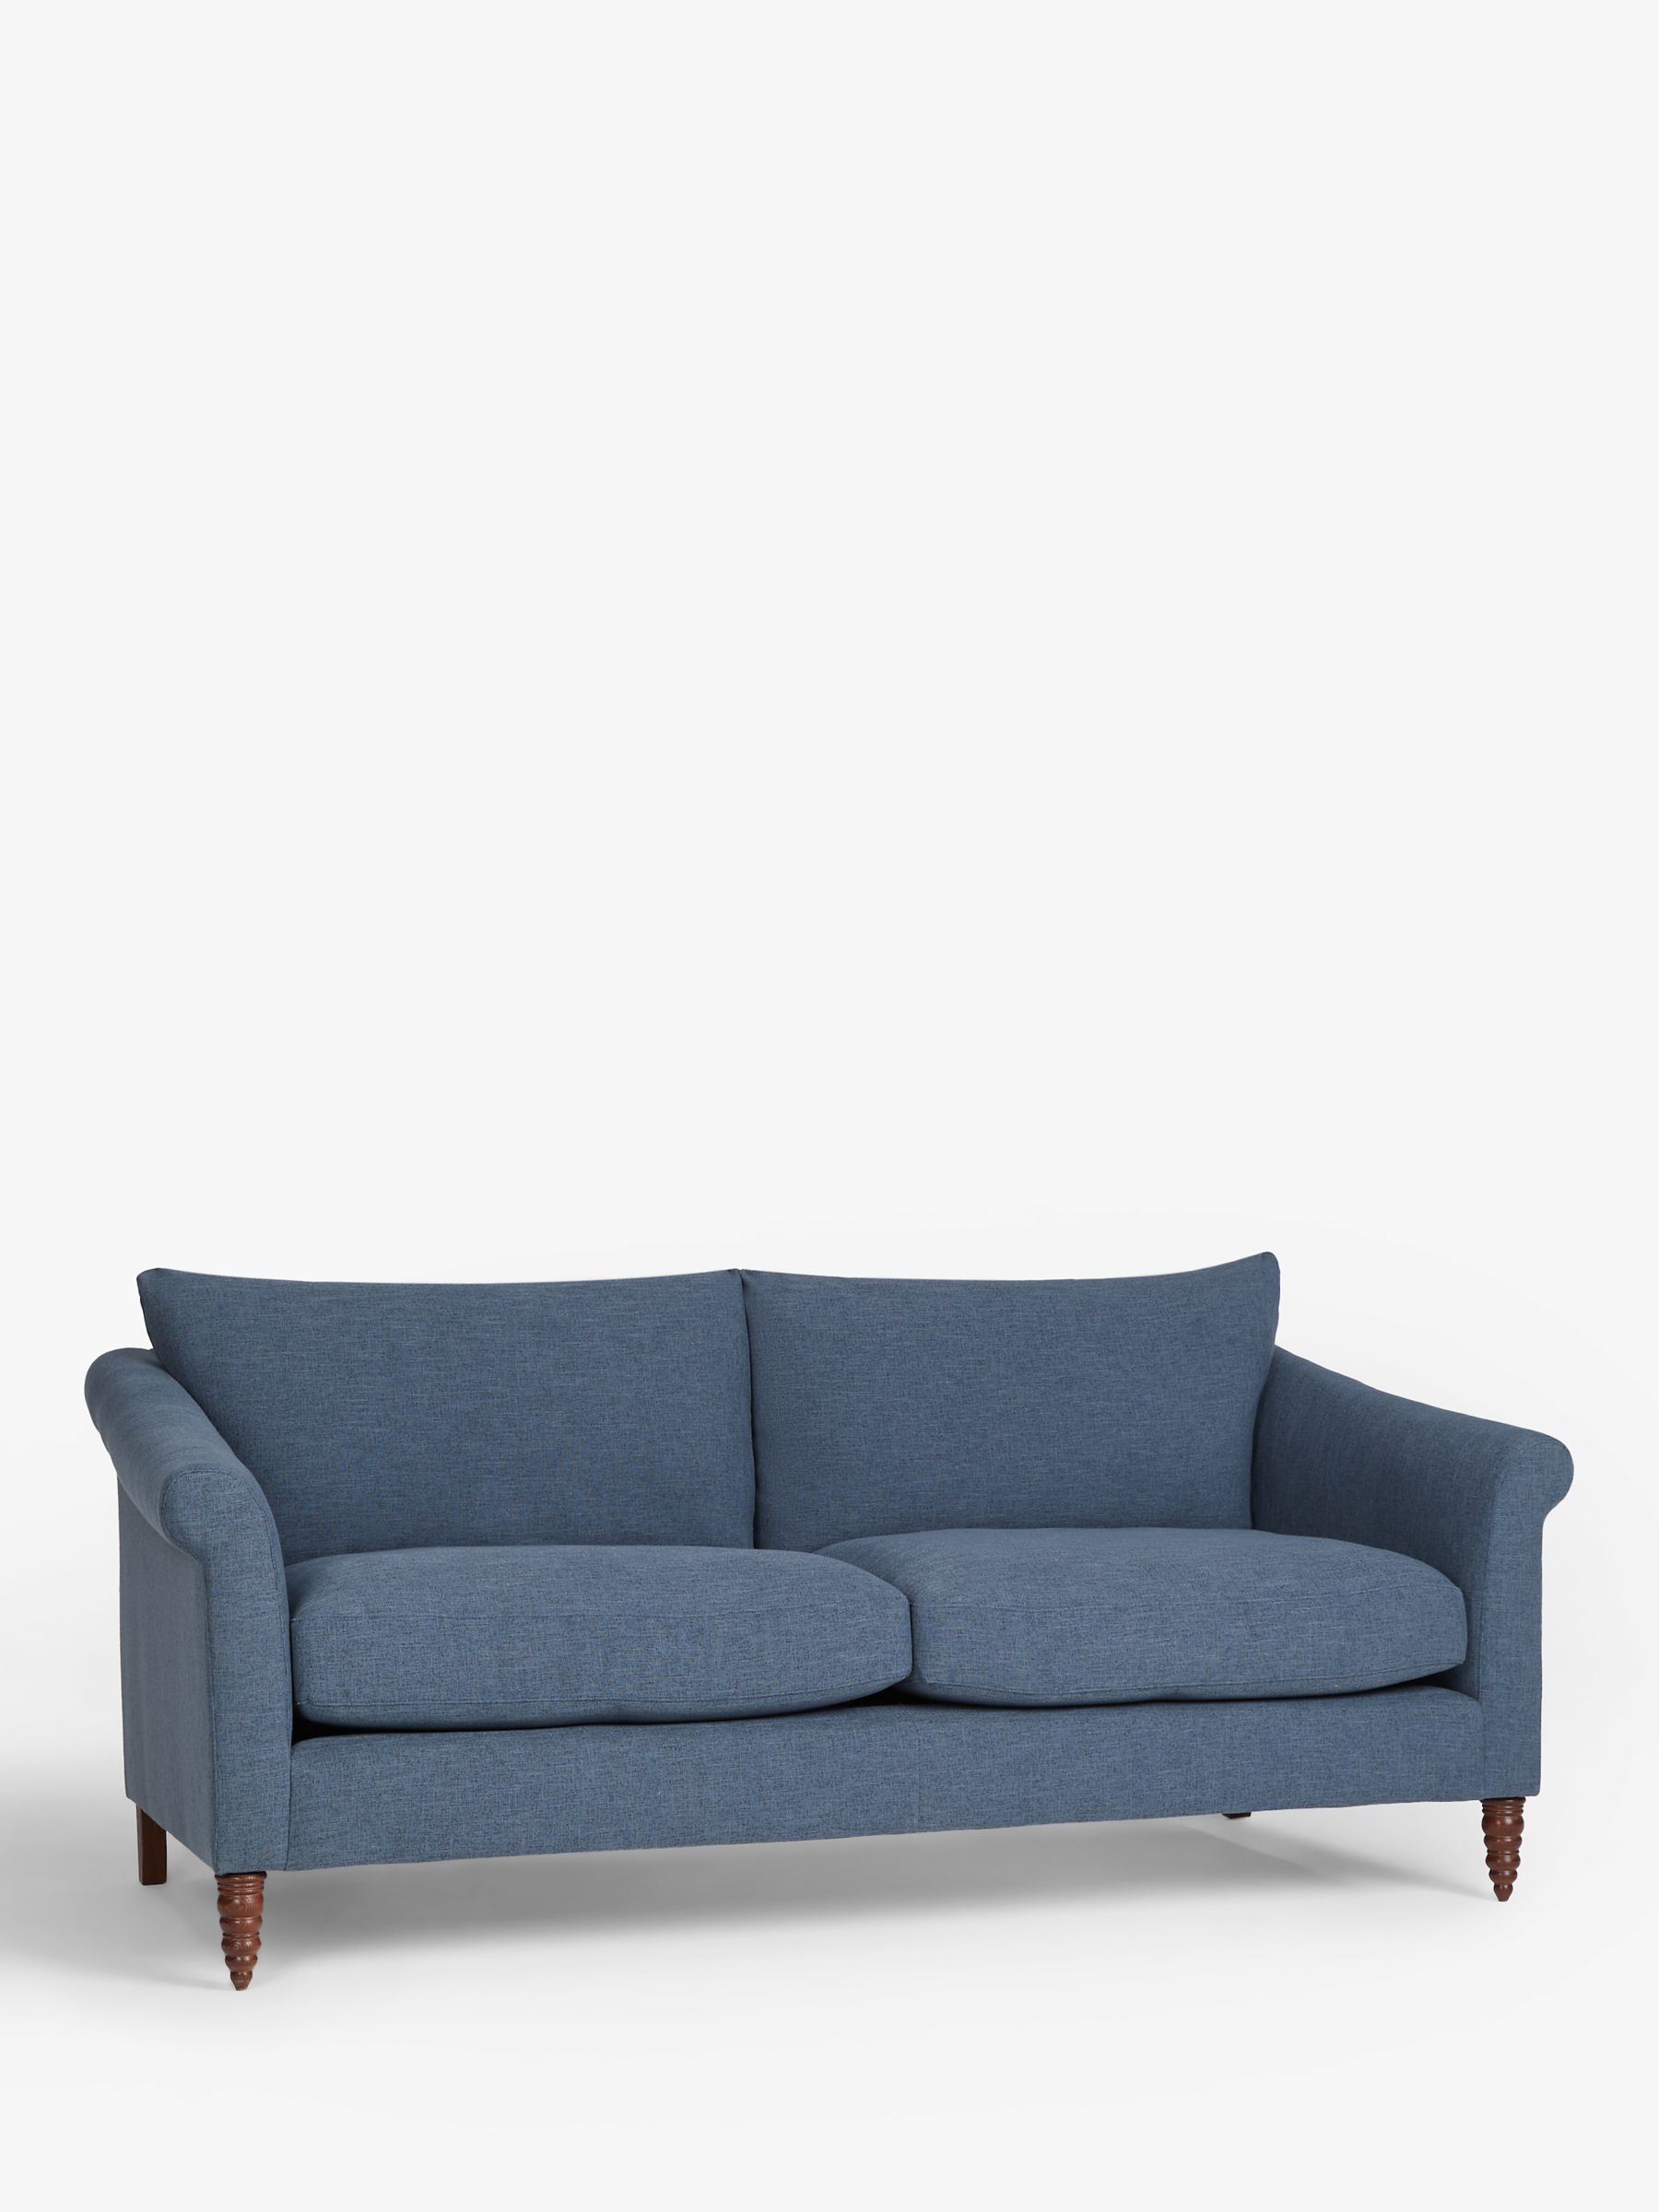 Sloane Range, John Lewis Sloane Medium 2 Seater Sofa, Dark Leg, Textured Linen Ink Blue